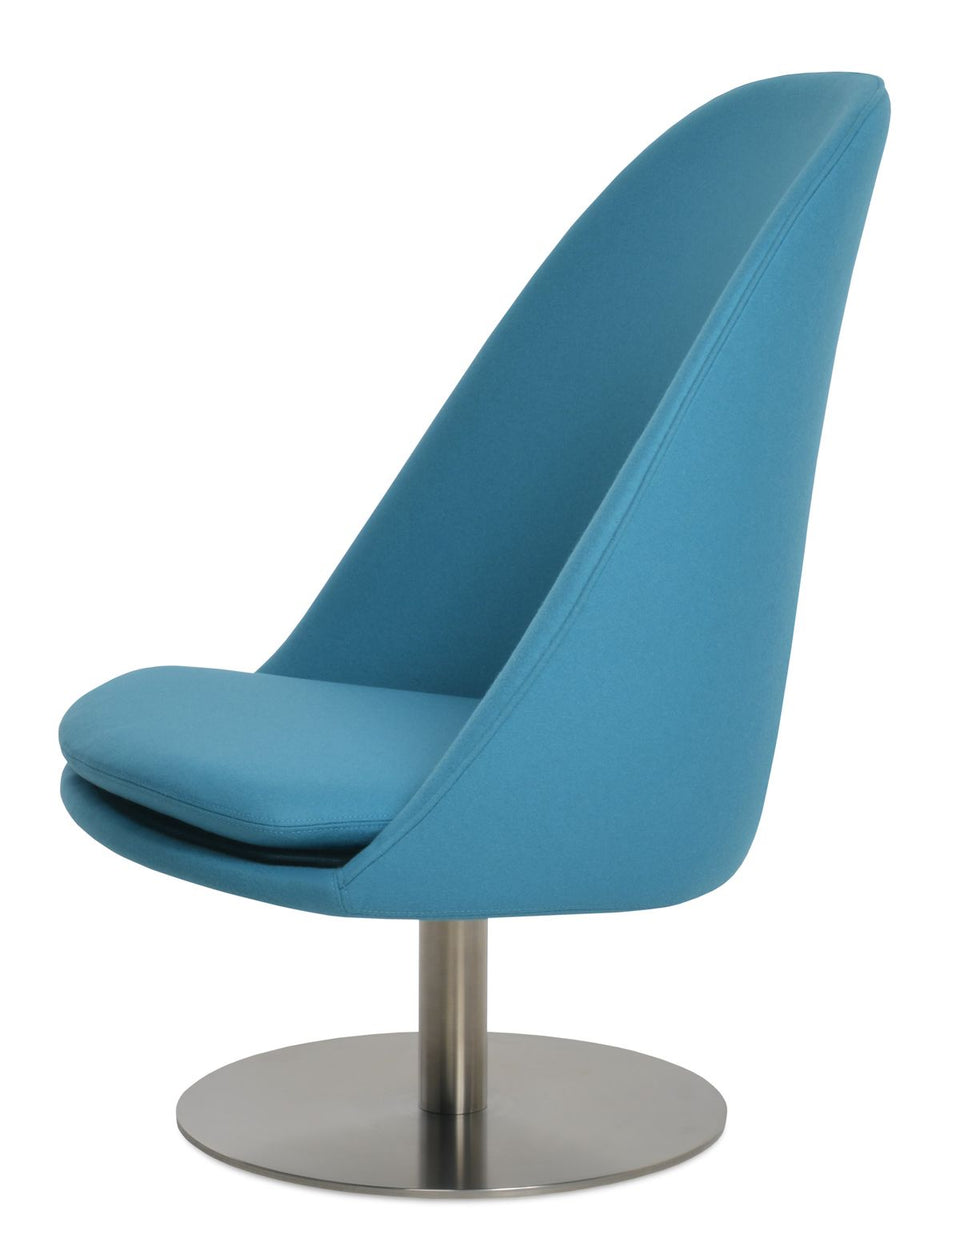 Avanos Lounge Chair Swivel Round.